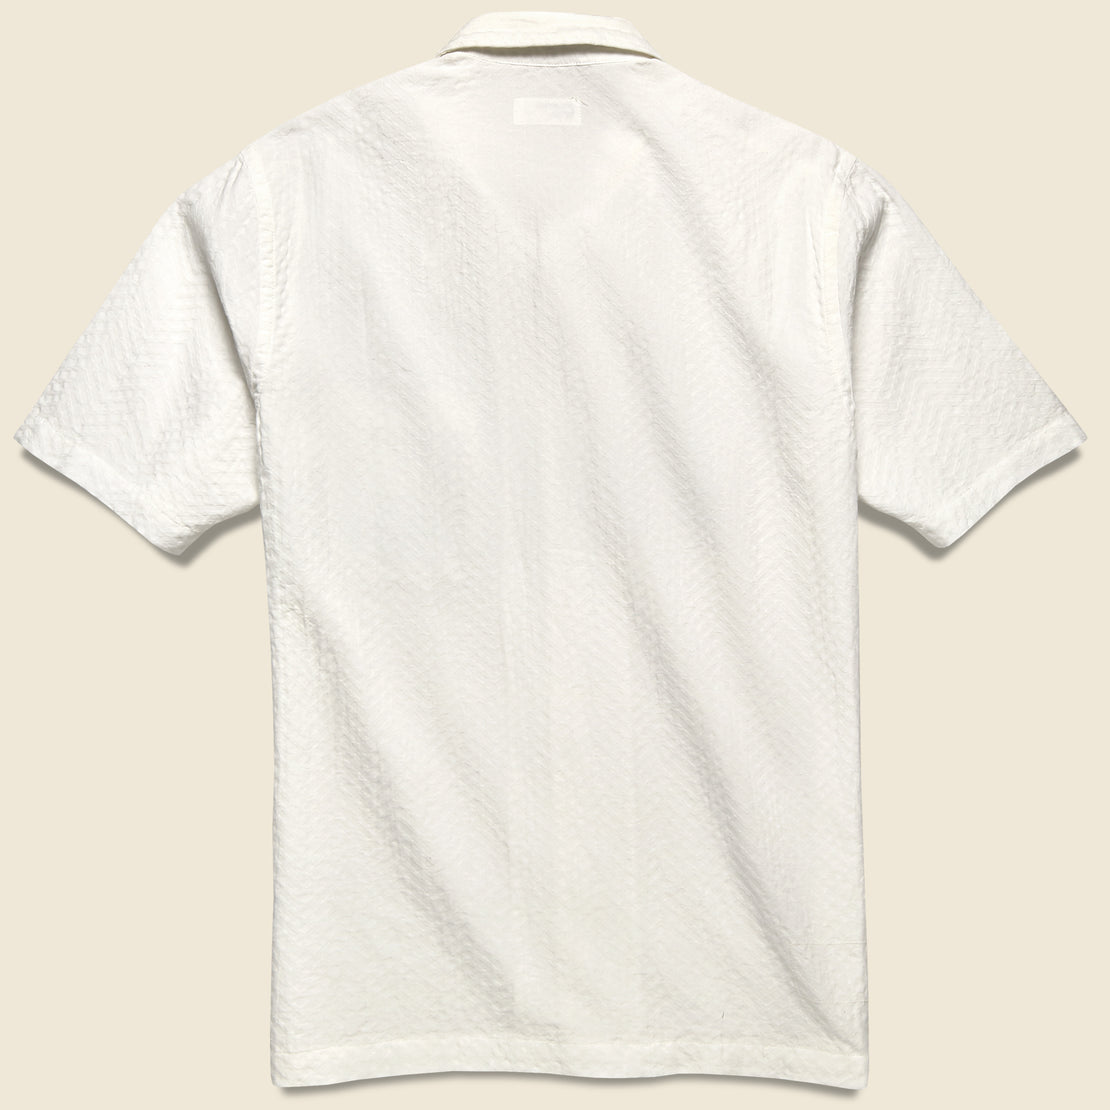 Road Shirt - White Weave